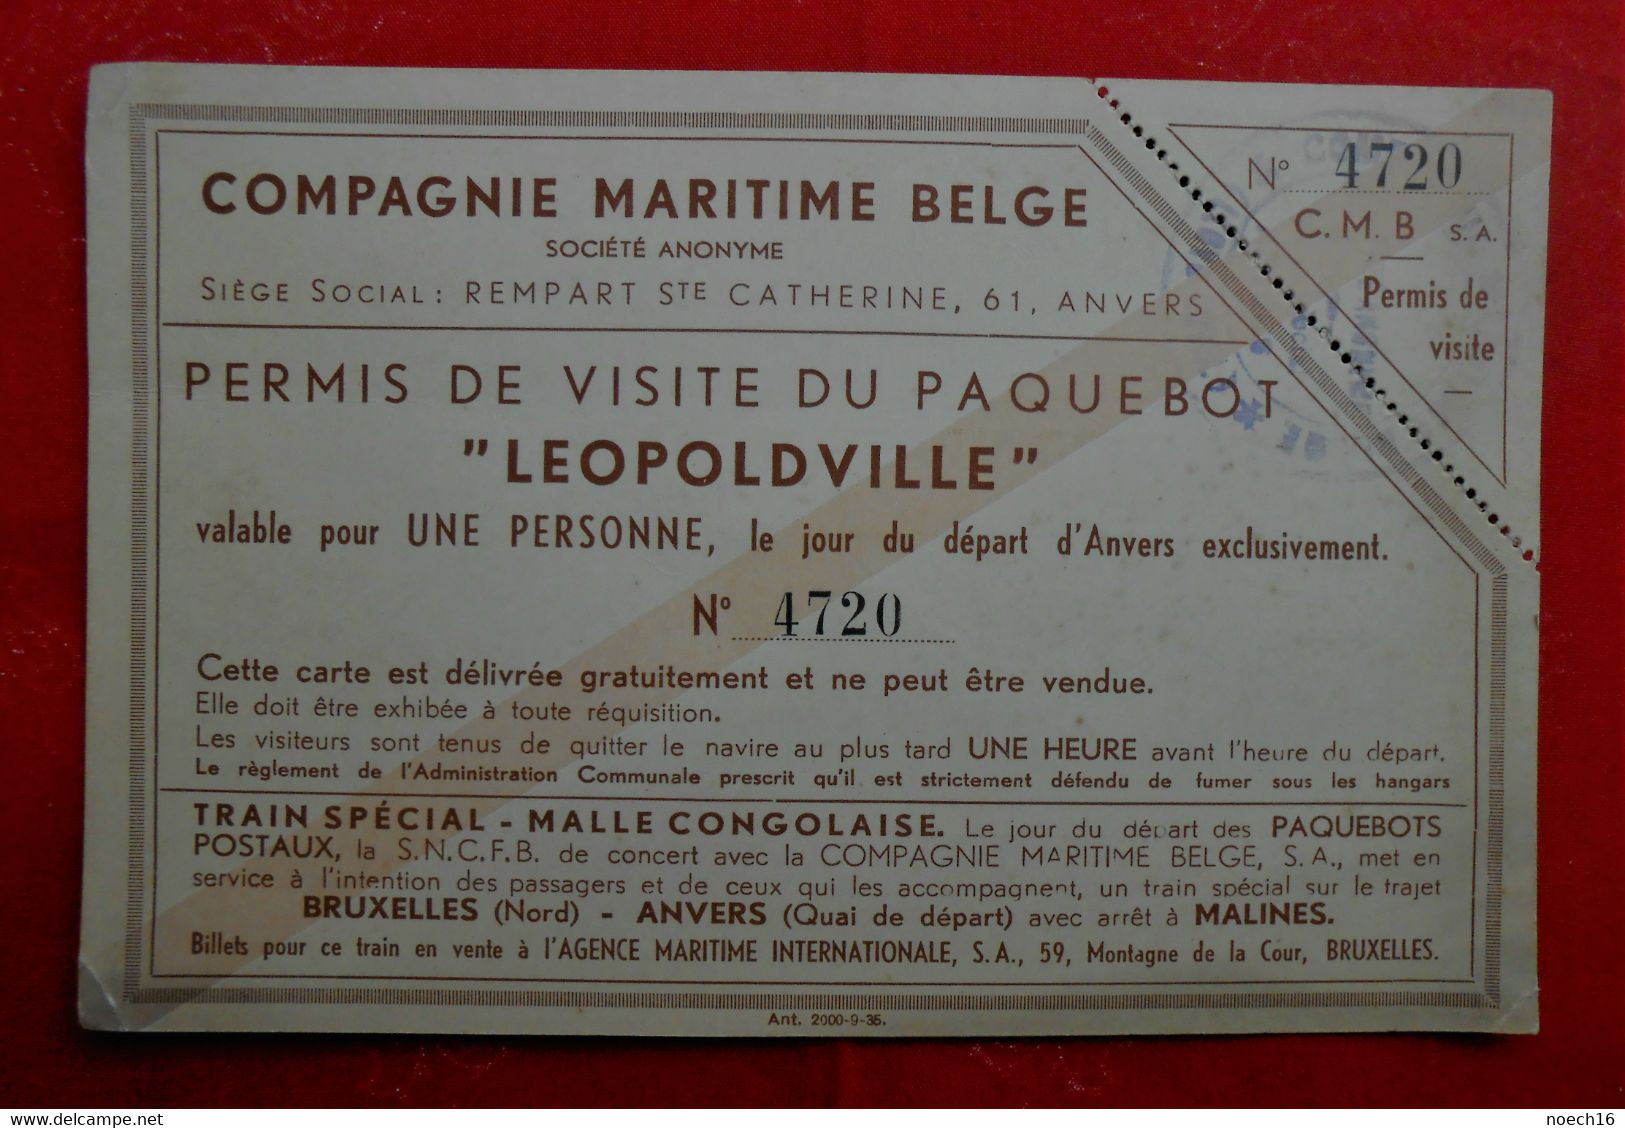 Compagnie Maritime Belge / Permis De Visite Du Paquebot "LEOPOLVILLE" - Toegangskaarten